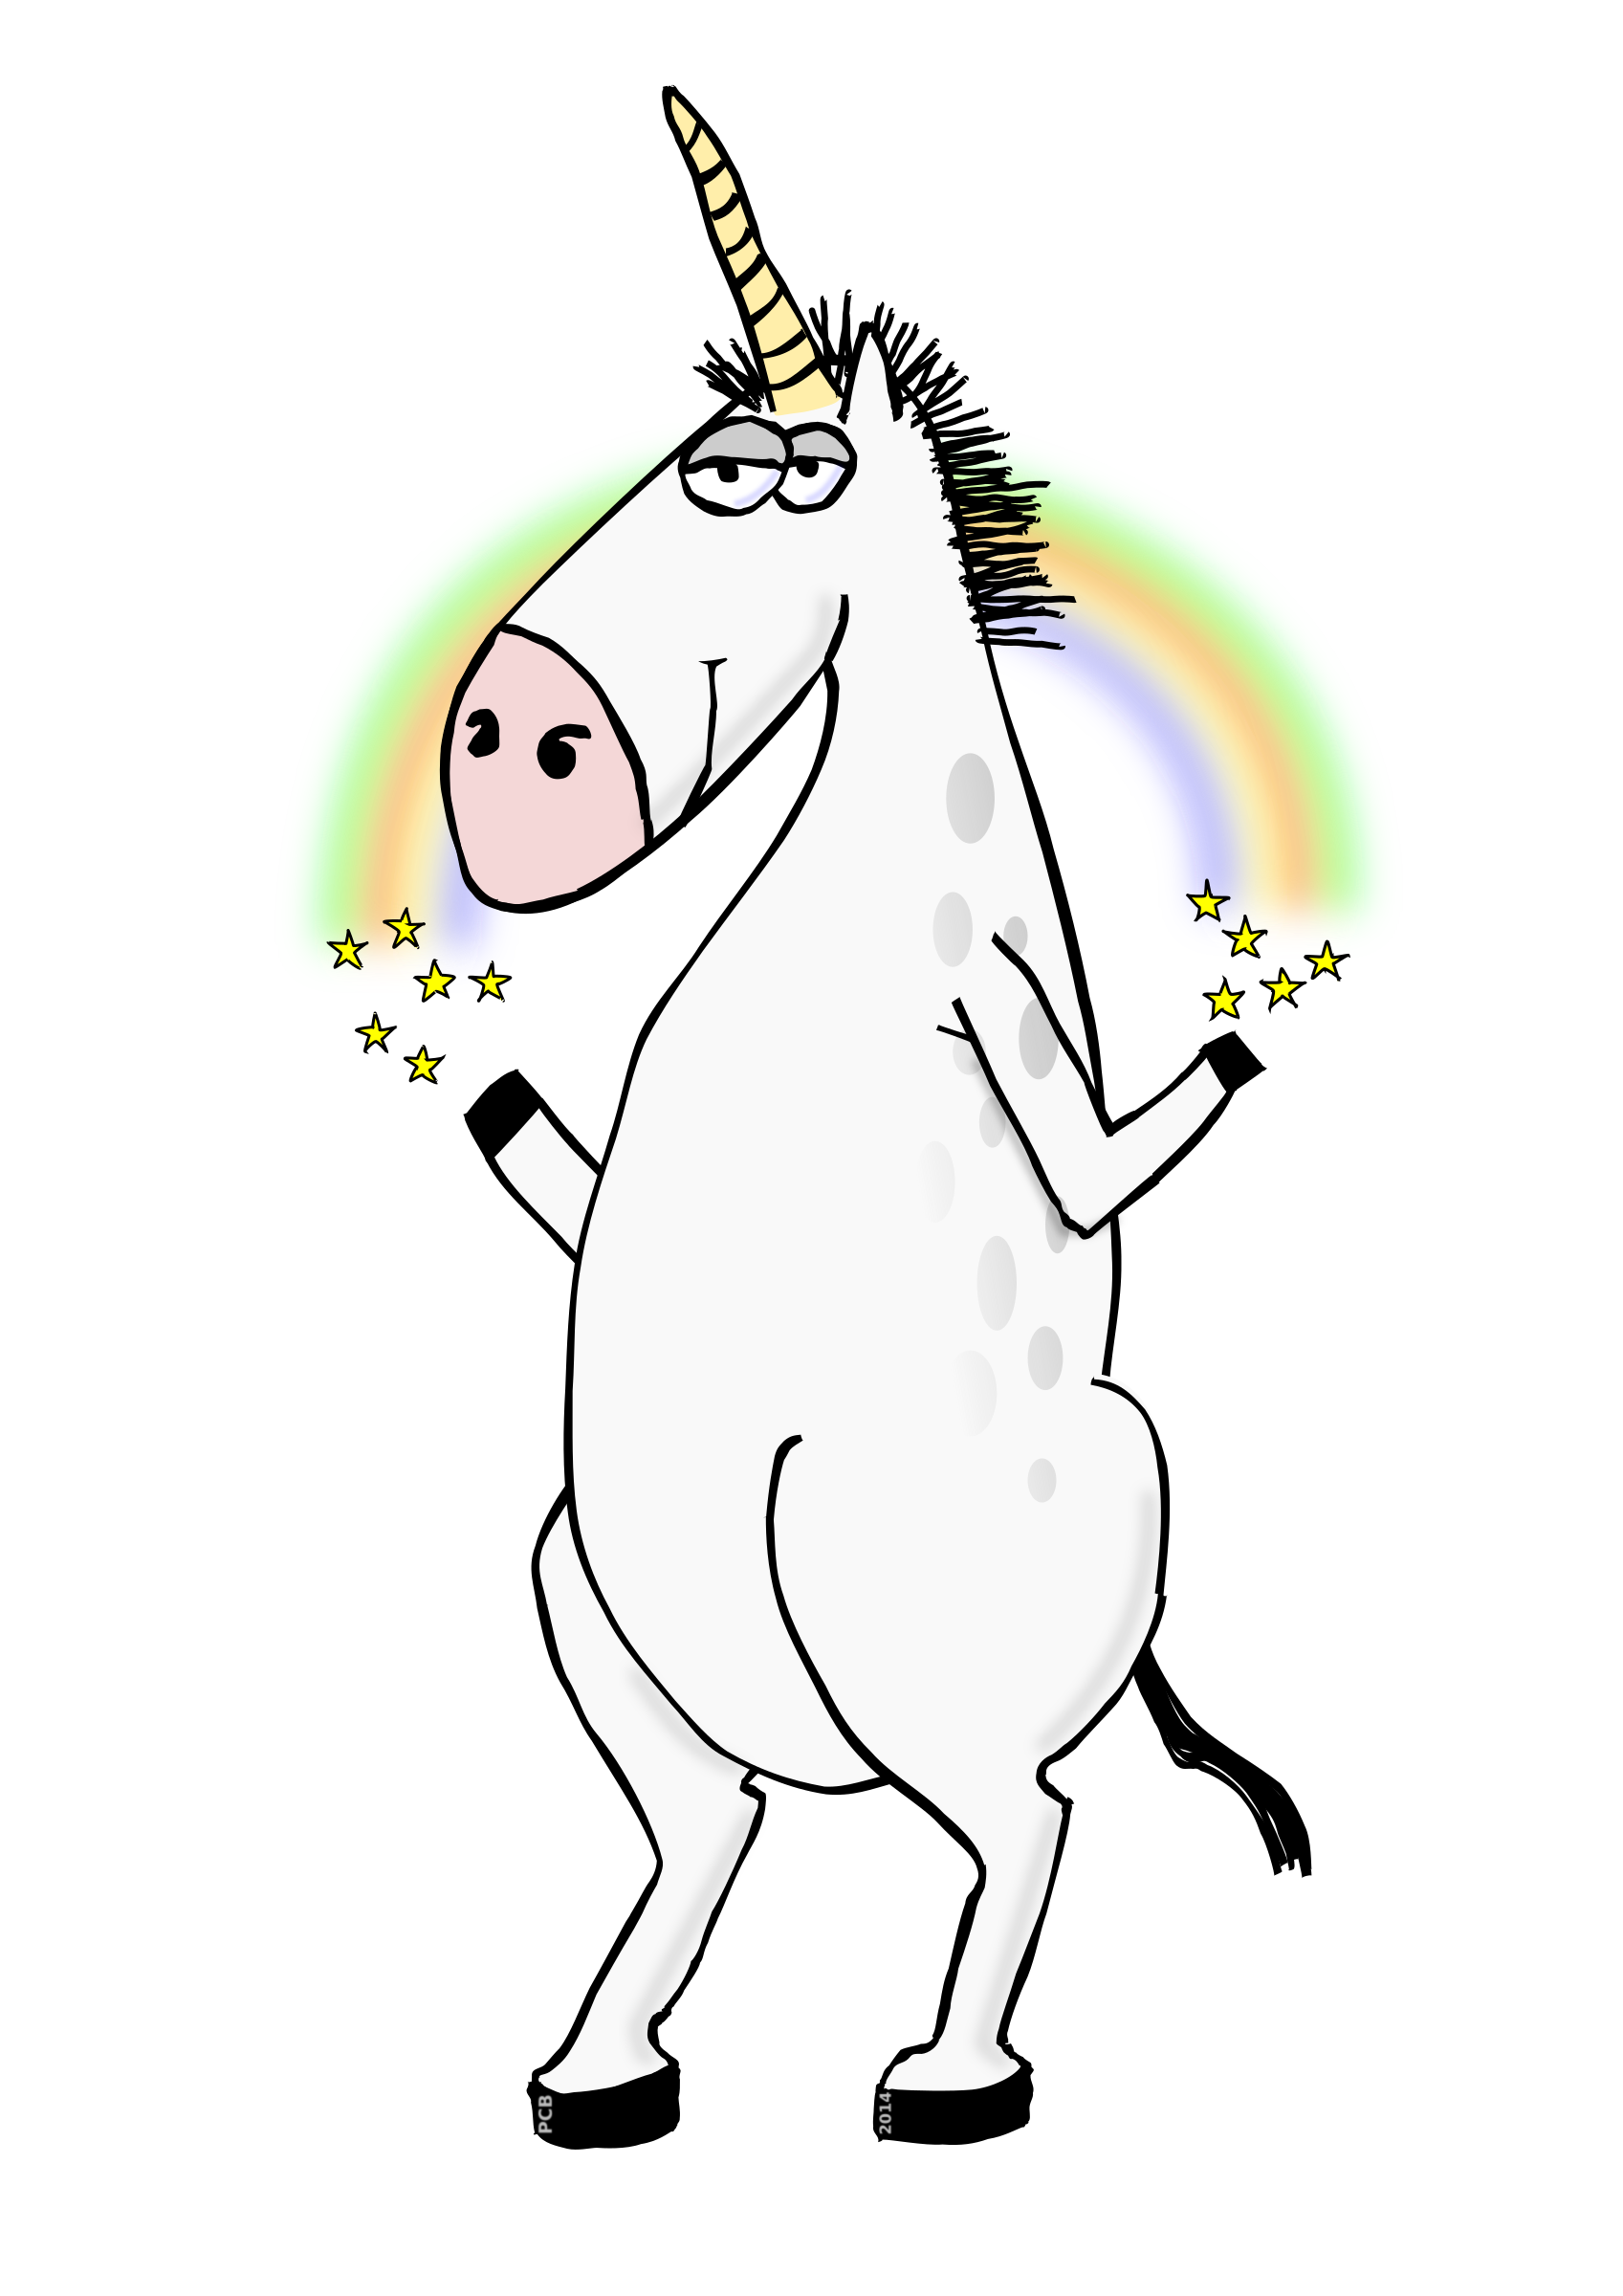 Unicorn with Rainbow vector clipart image - Free stock photo - Public